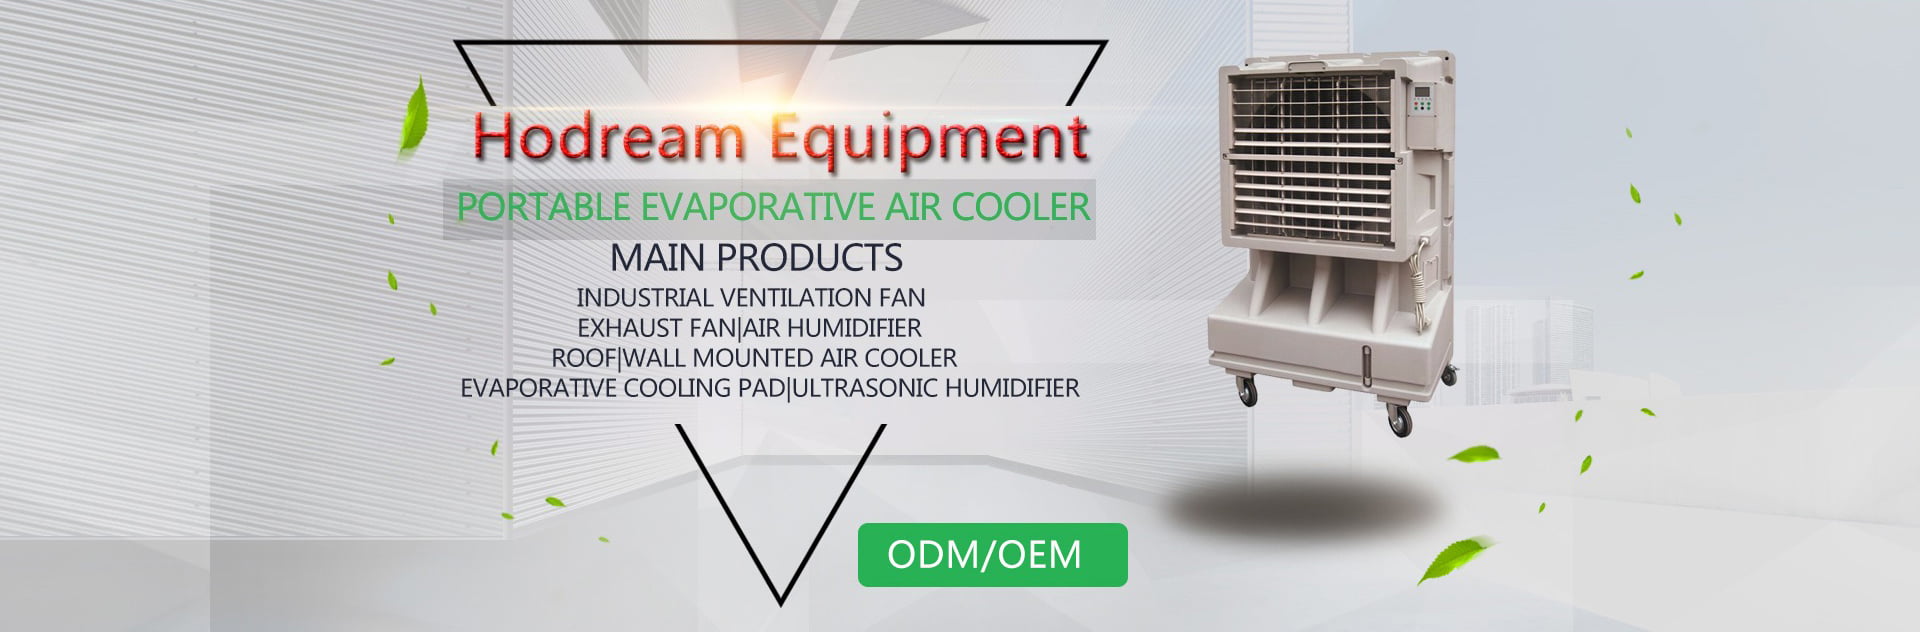 Desiccant Rotor, Plastic Dryer Desiccant Rotor, Heat Exchanger - HODREAM